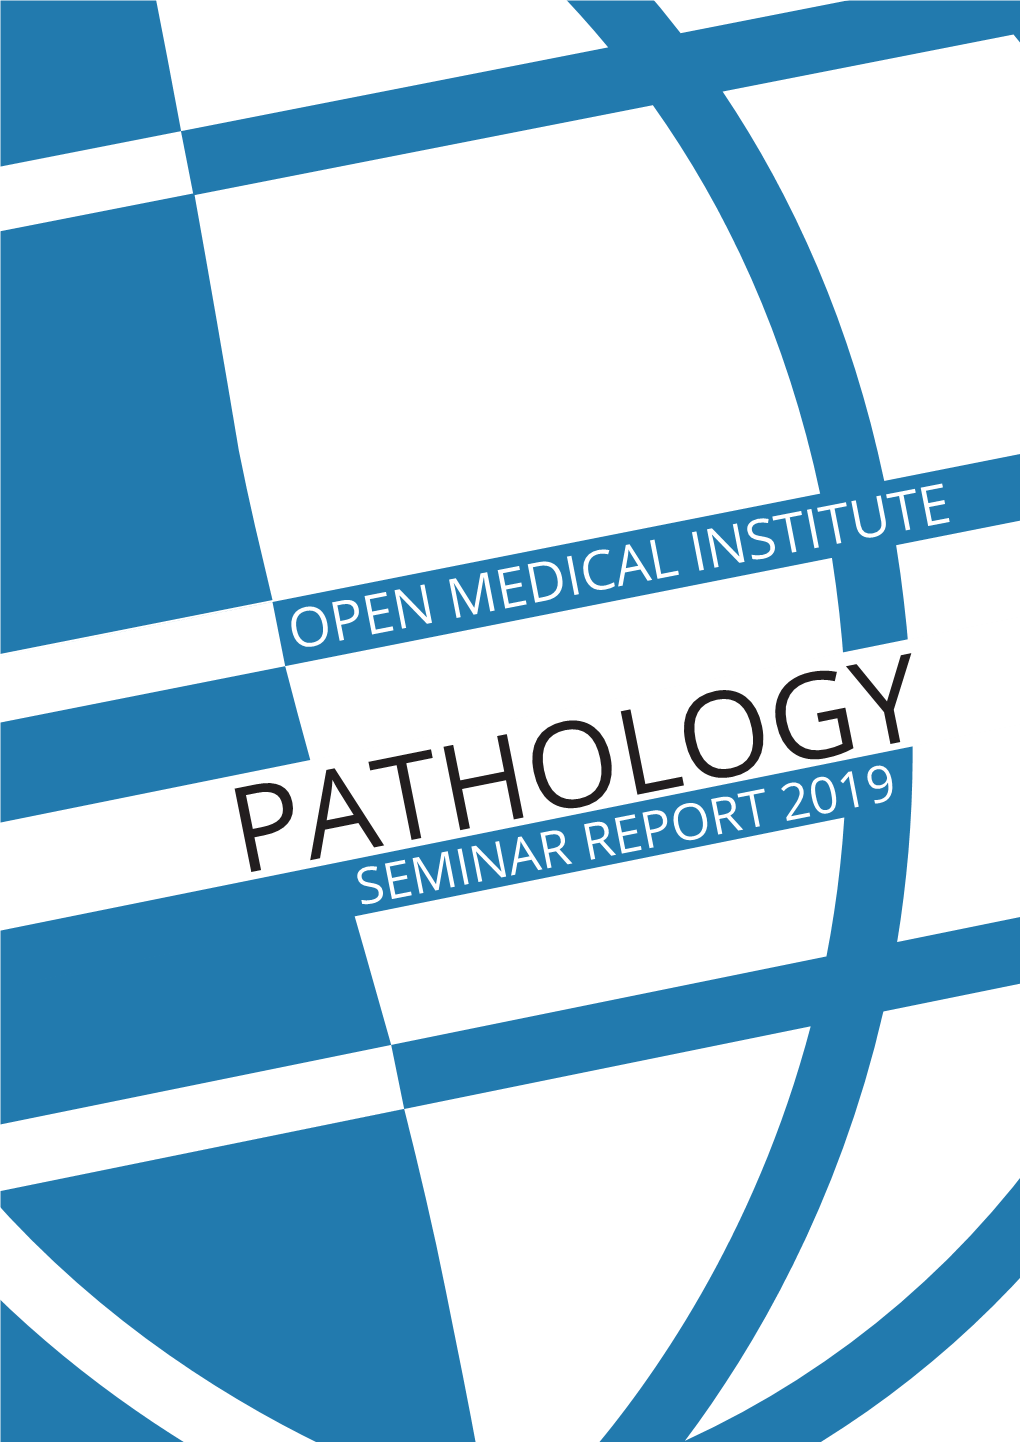 Pathologyseminar Report 2019